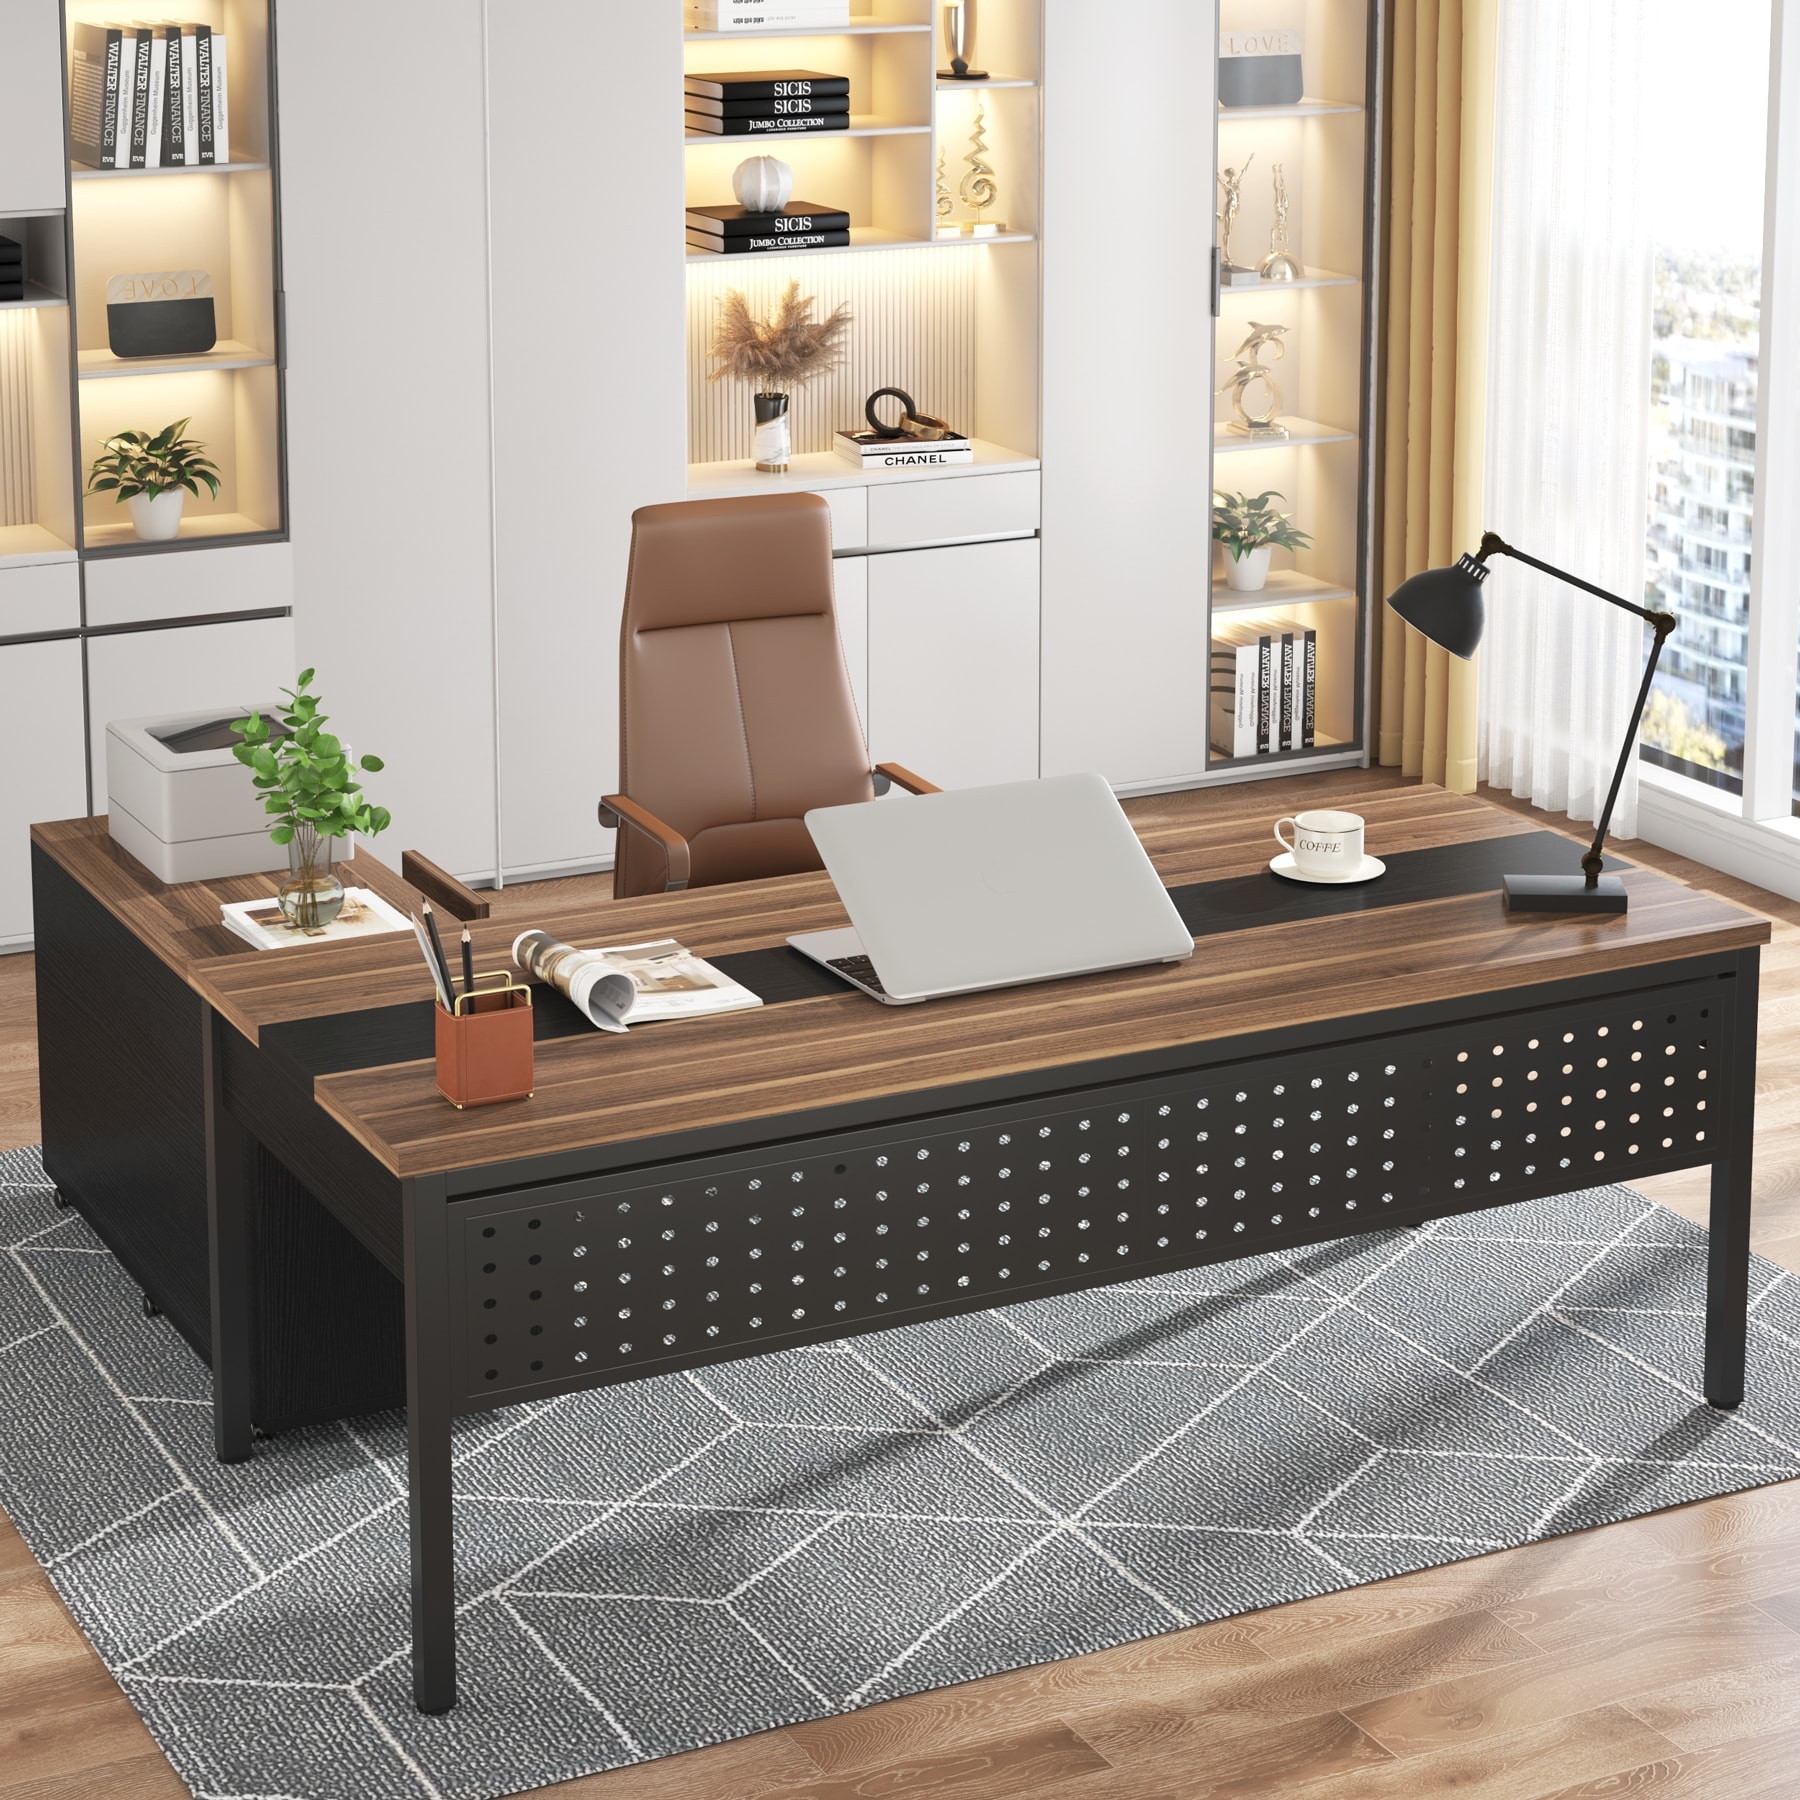 Wooden Executive Office Desk